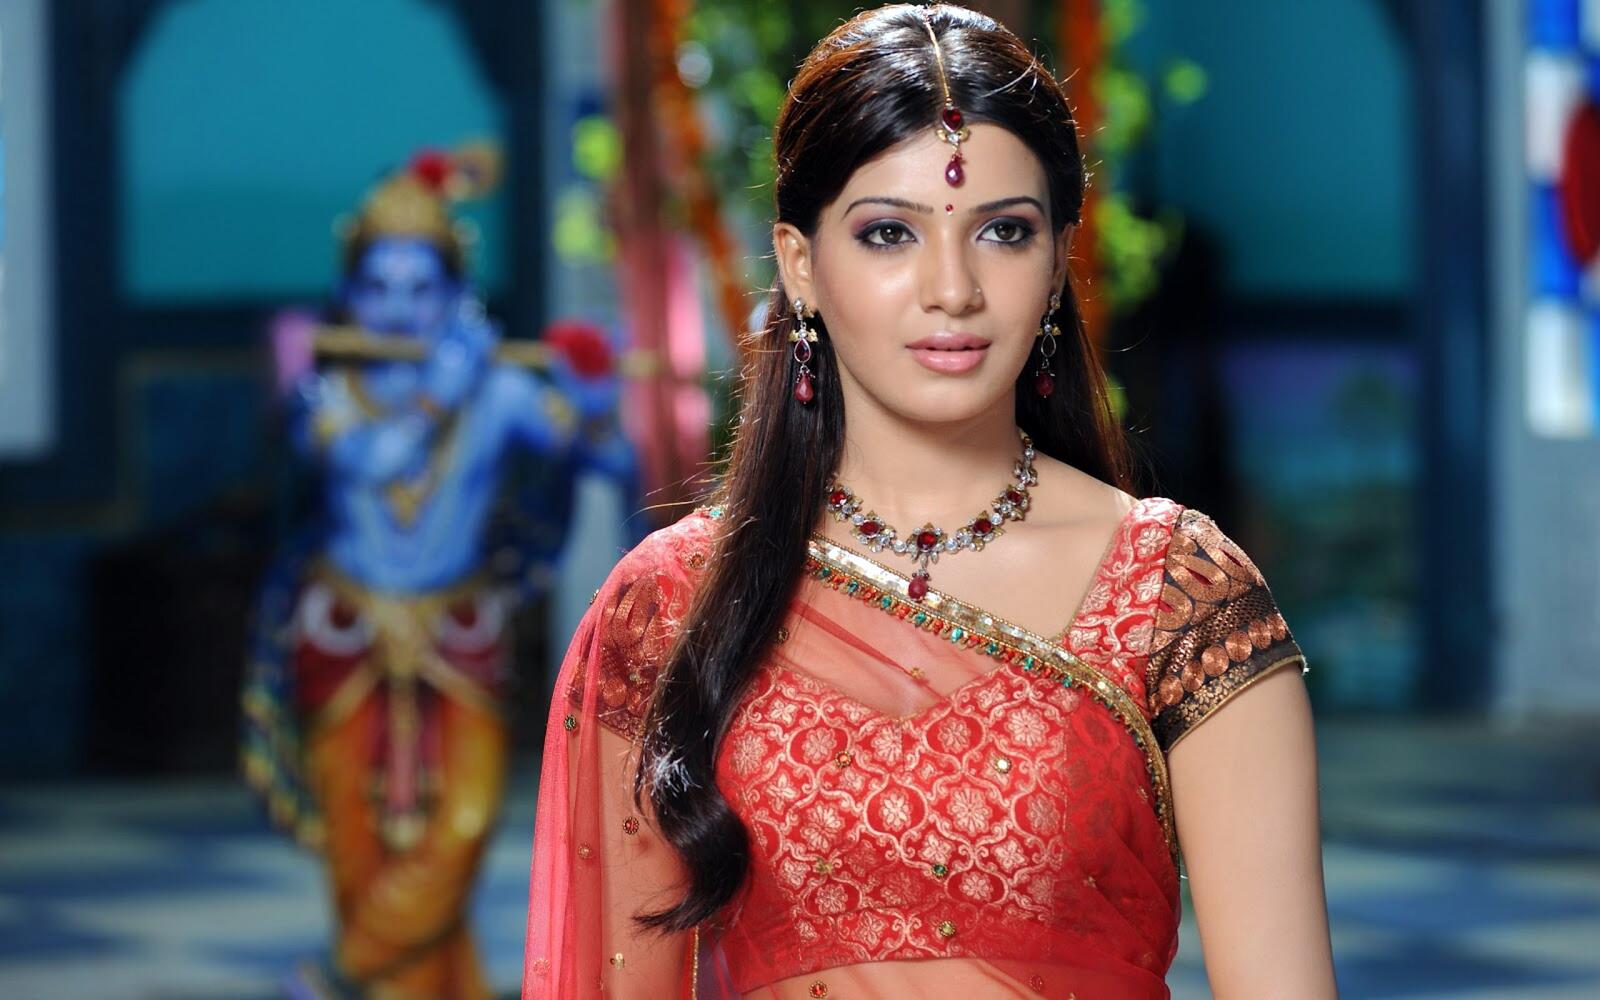 Wallpapers Samantha dress indian celebrities on the desktop